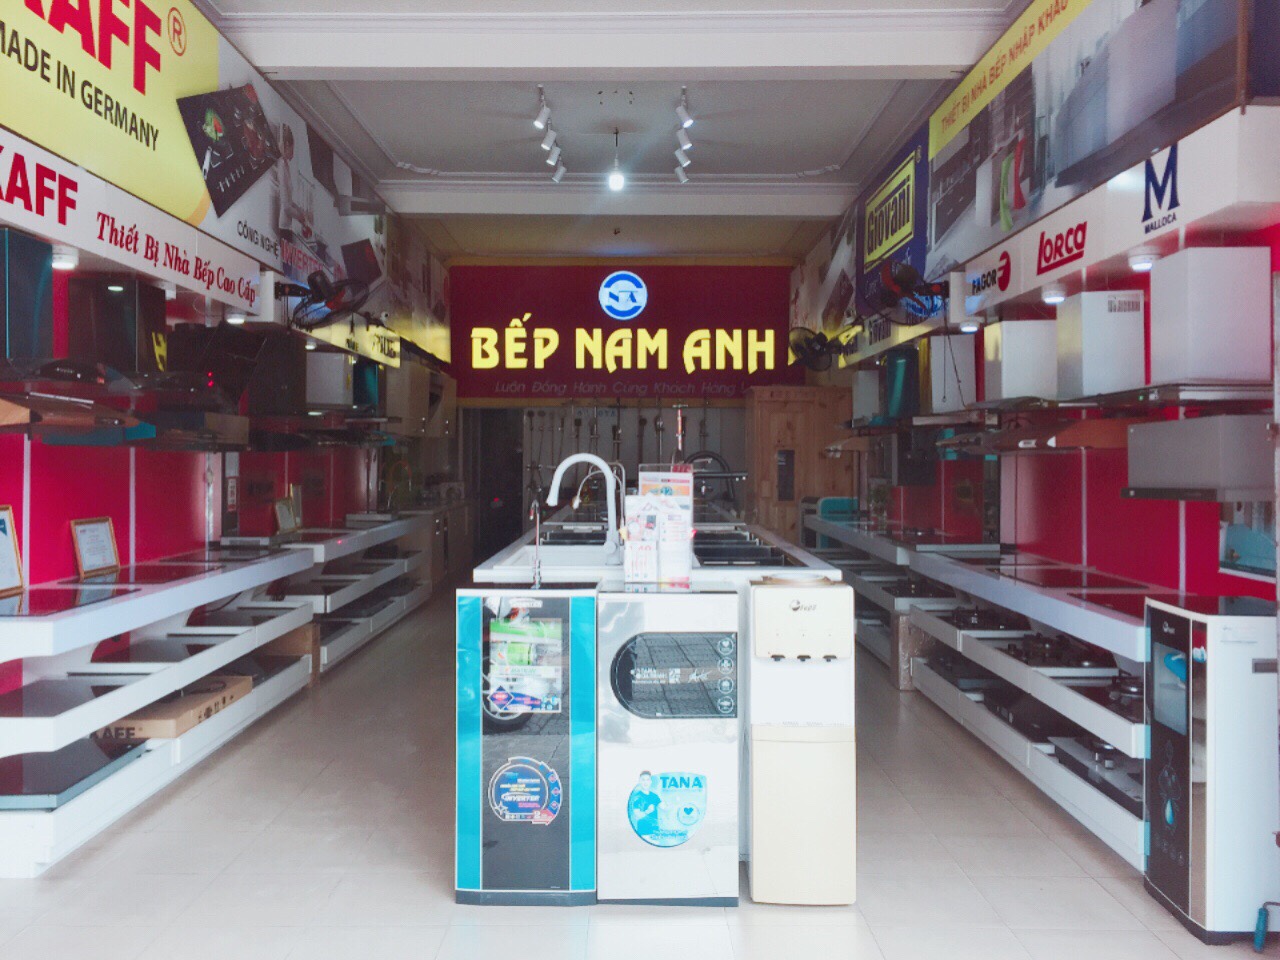 bep-nam-anh-ban-bon-tam-massage-caesar-chinh-hang-uy-tin